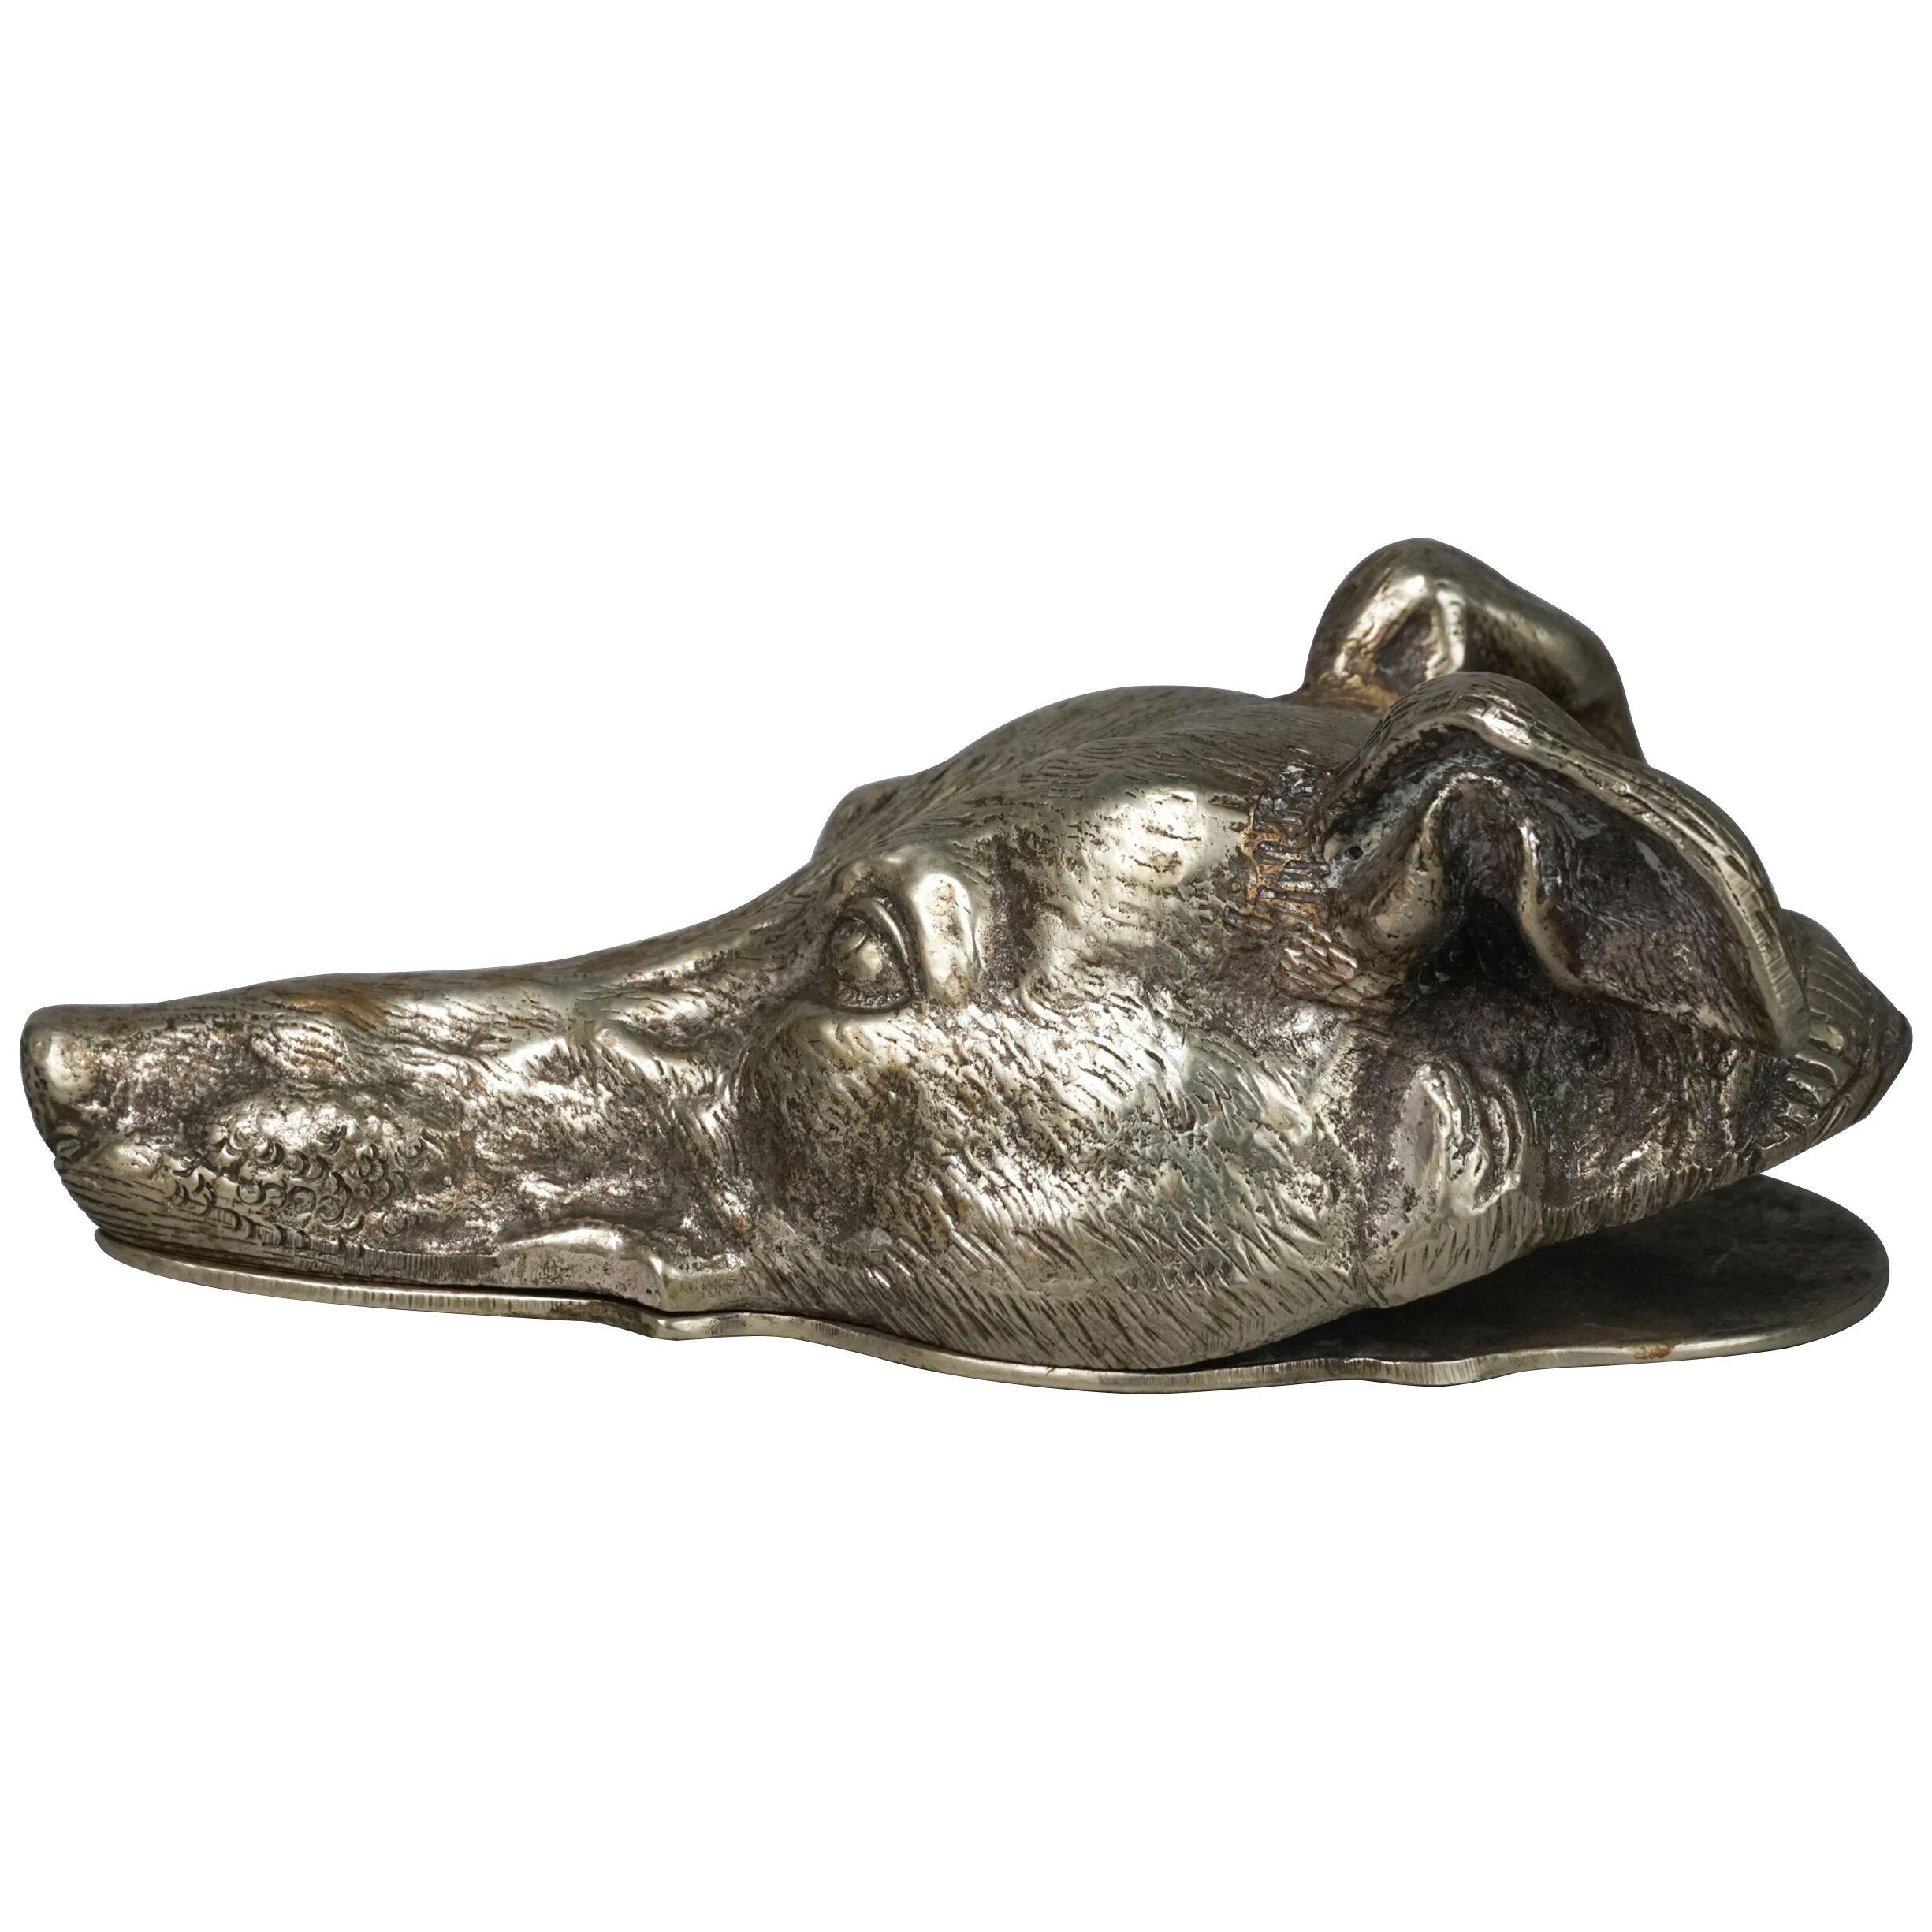 Late 19th Century Vienna Bronze Greyhound Dog Head Letter Holder or Paper Clip